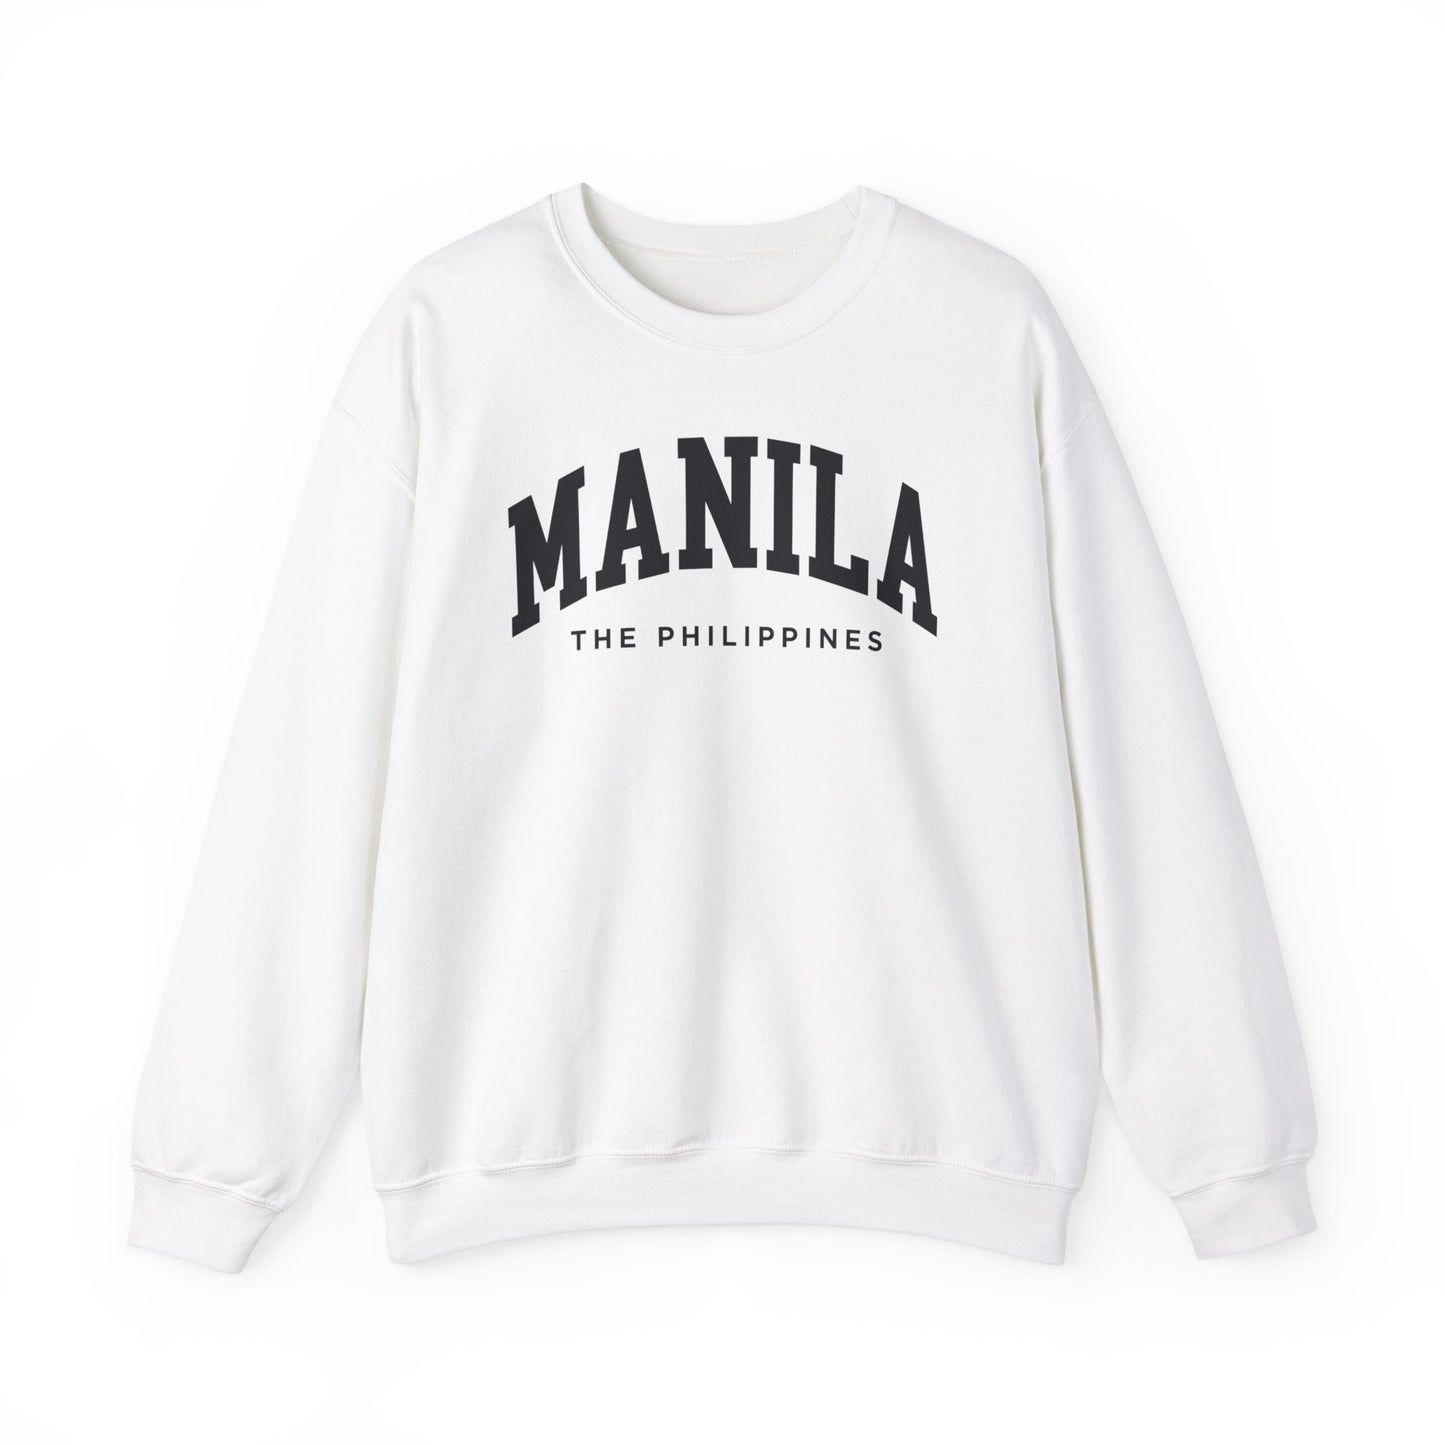 Manila Philippines Sweatshirt